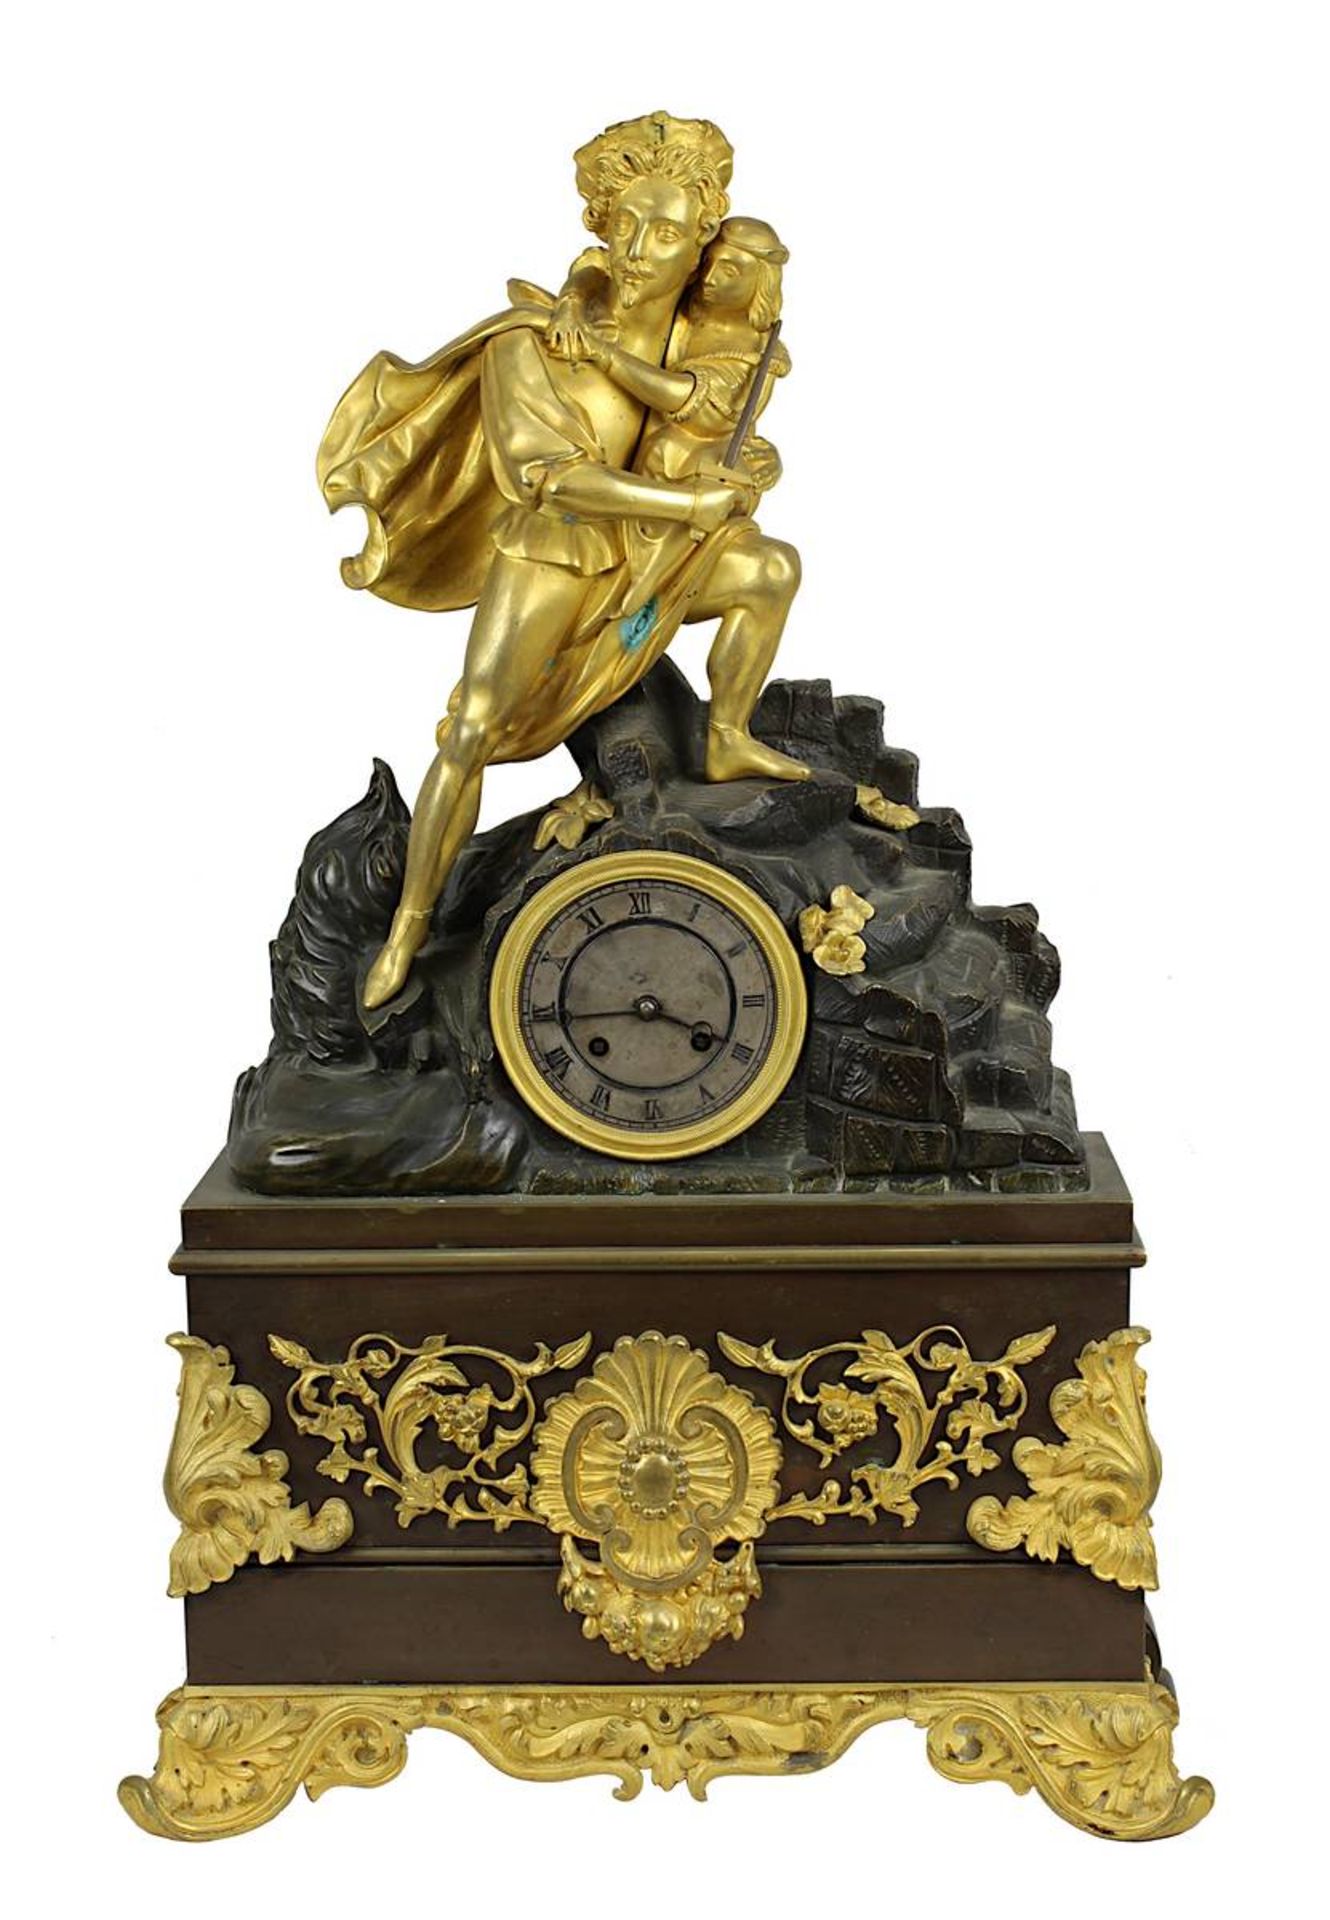 Große Pendule um 1830/40, Bronze, teils mit Vergoldung, hoher rechteckiger Sockel mit Blattwerk-